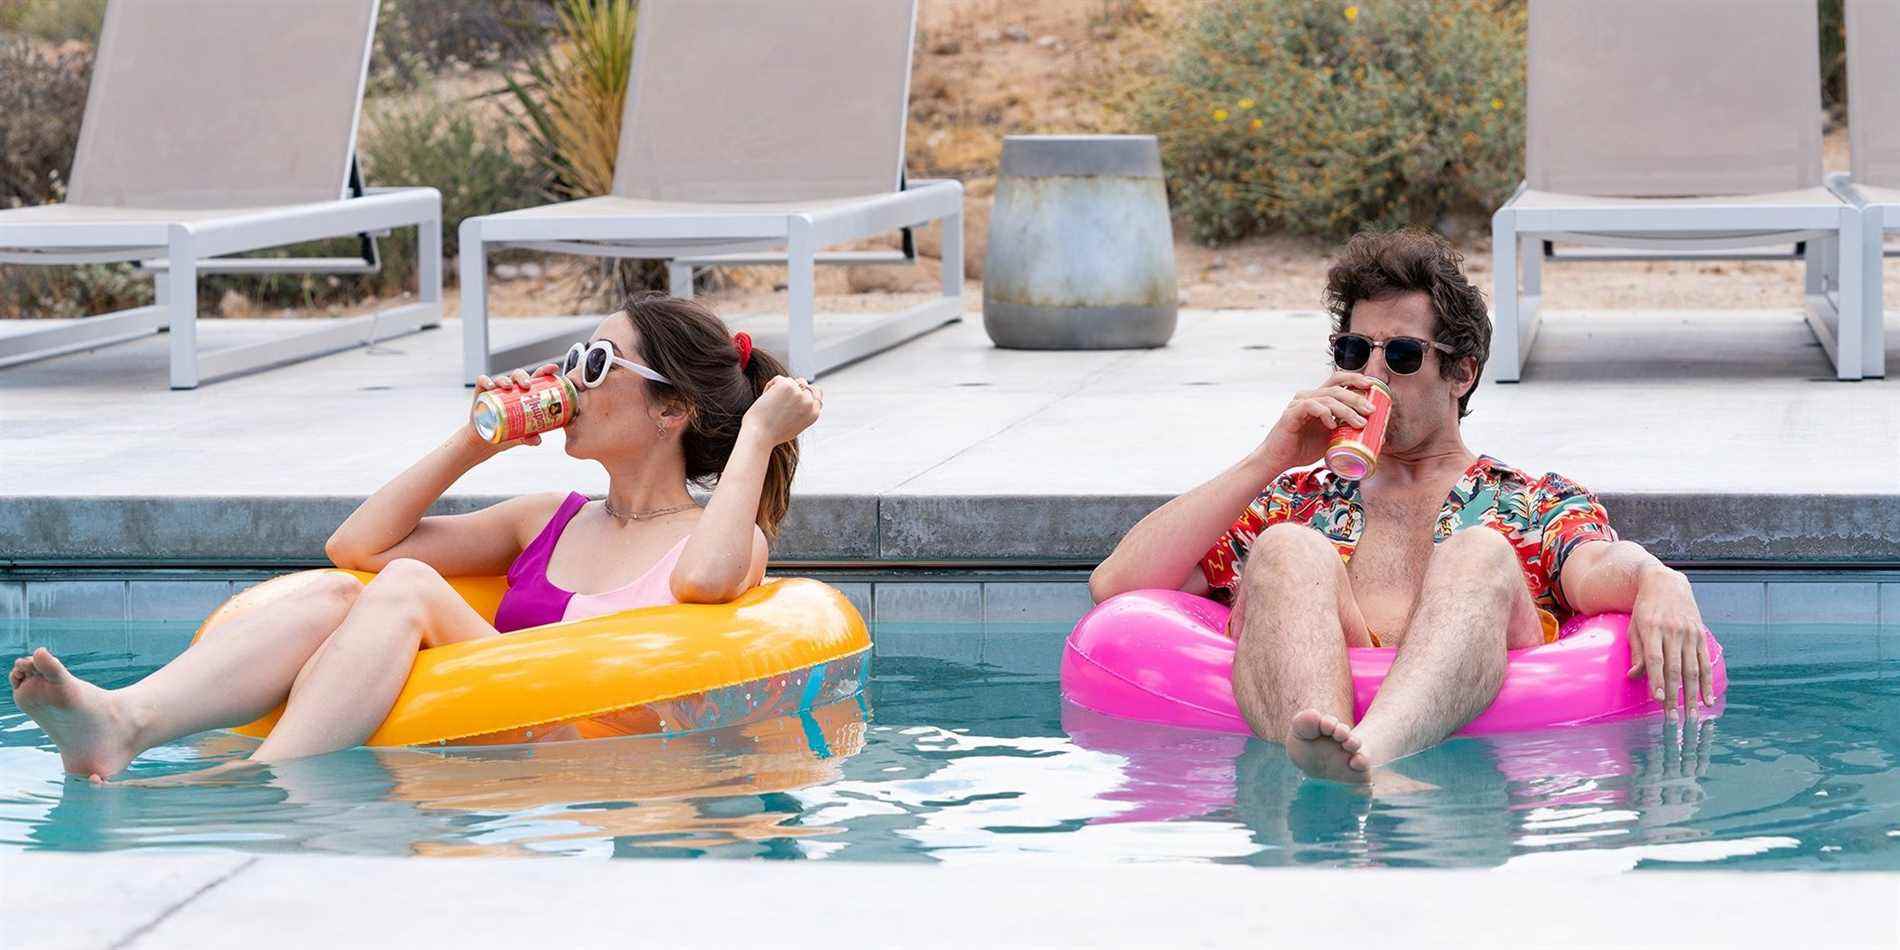 Andy Samberg et Cristin Milioti à Palm Springs